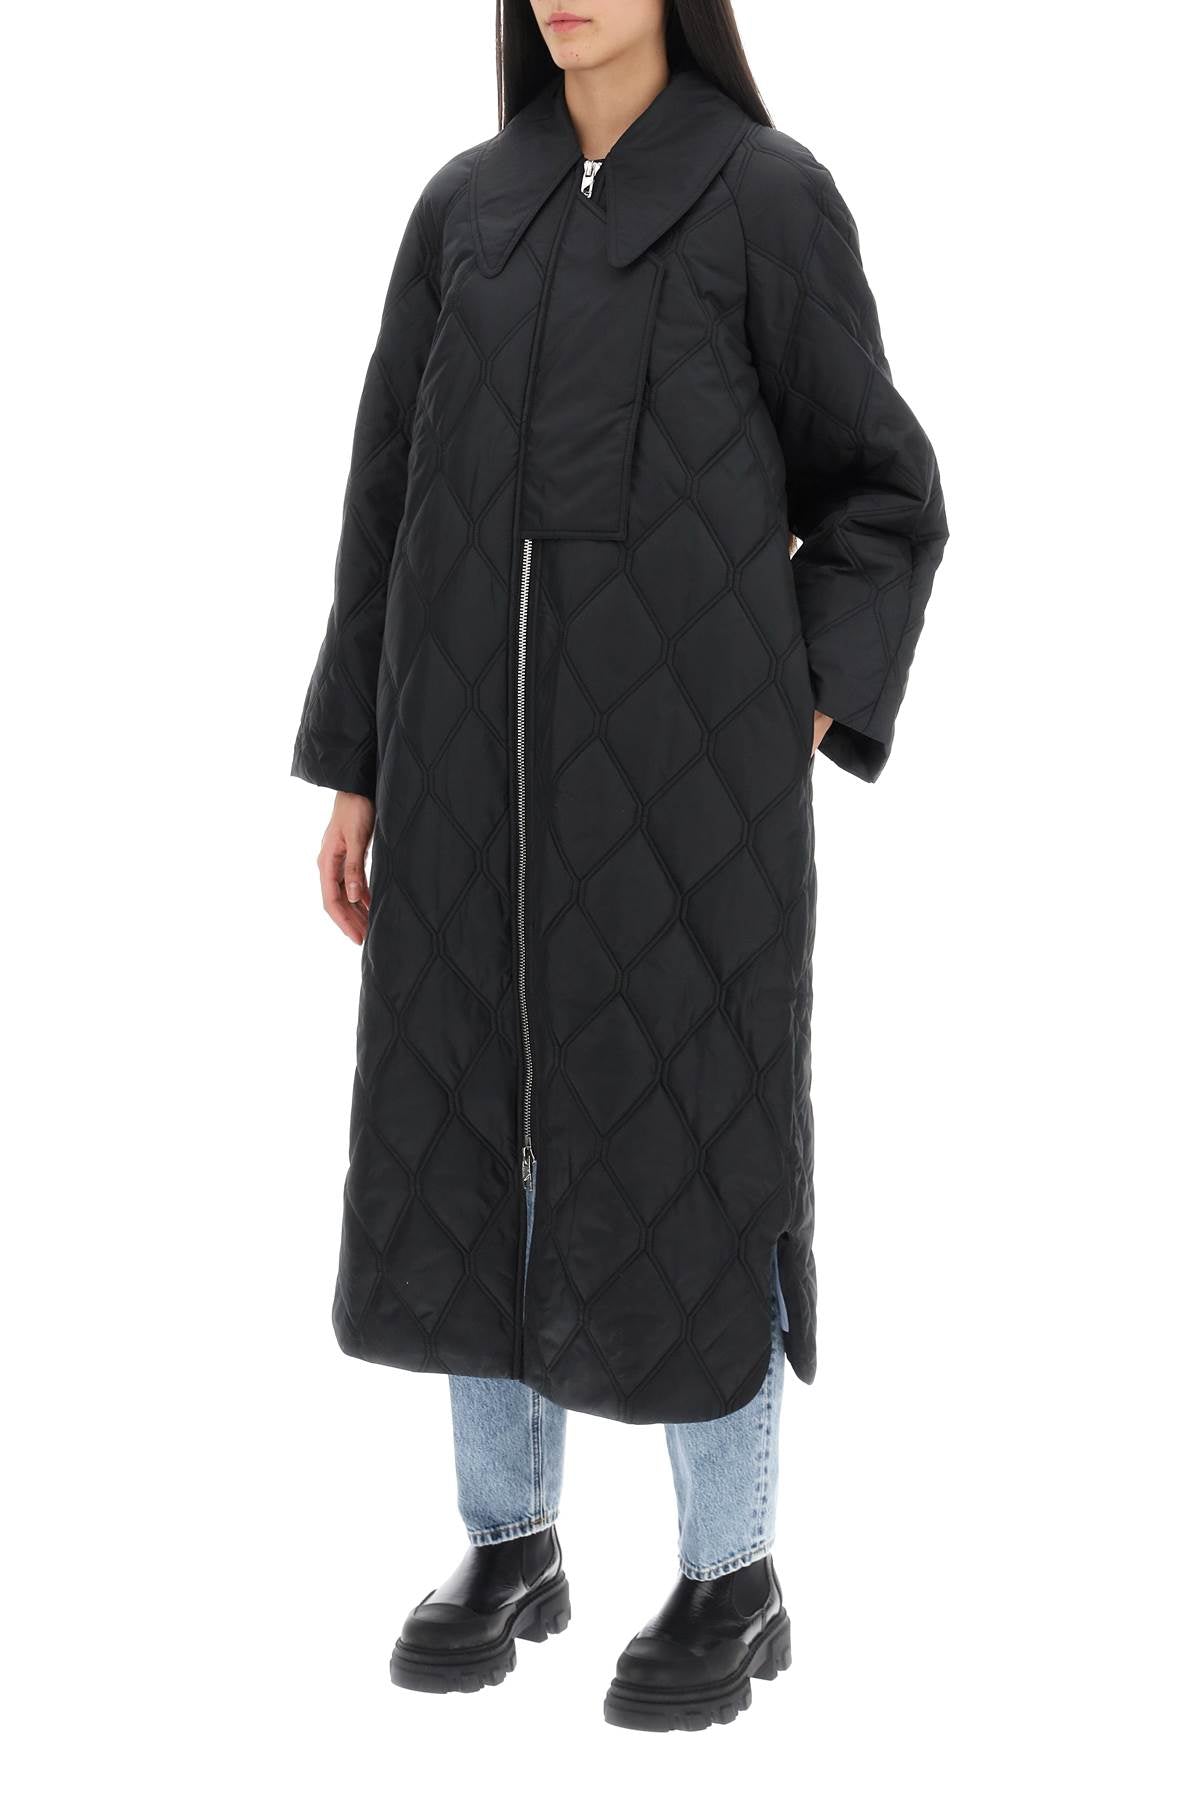 Ganni quilted oversized coat-3